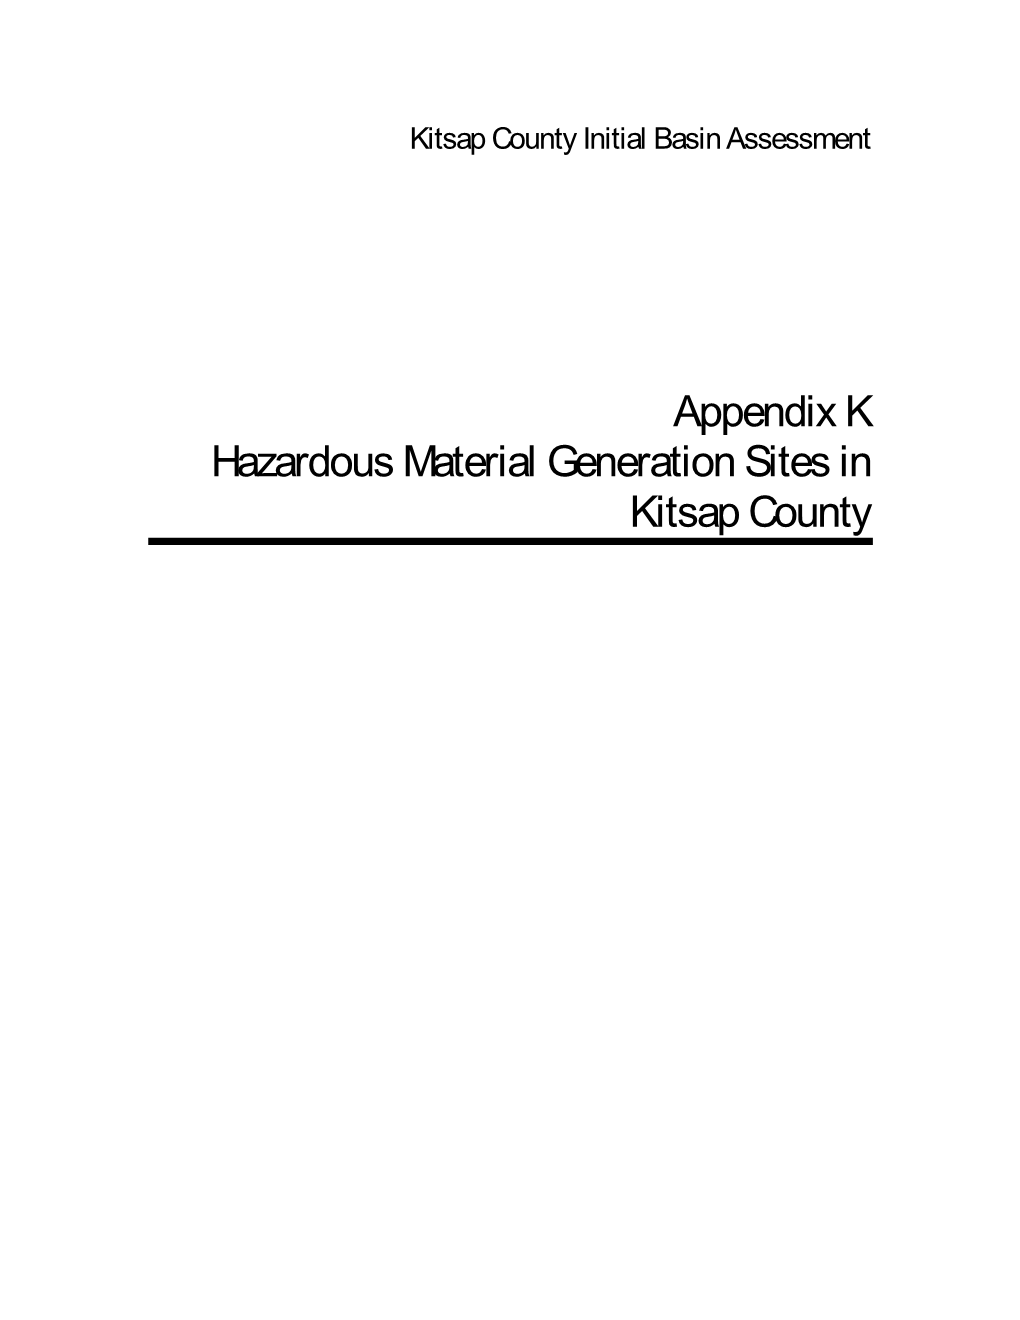 Appendix K Hazardous Material Generation Sites in Kitsap County